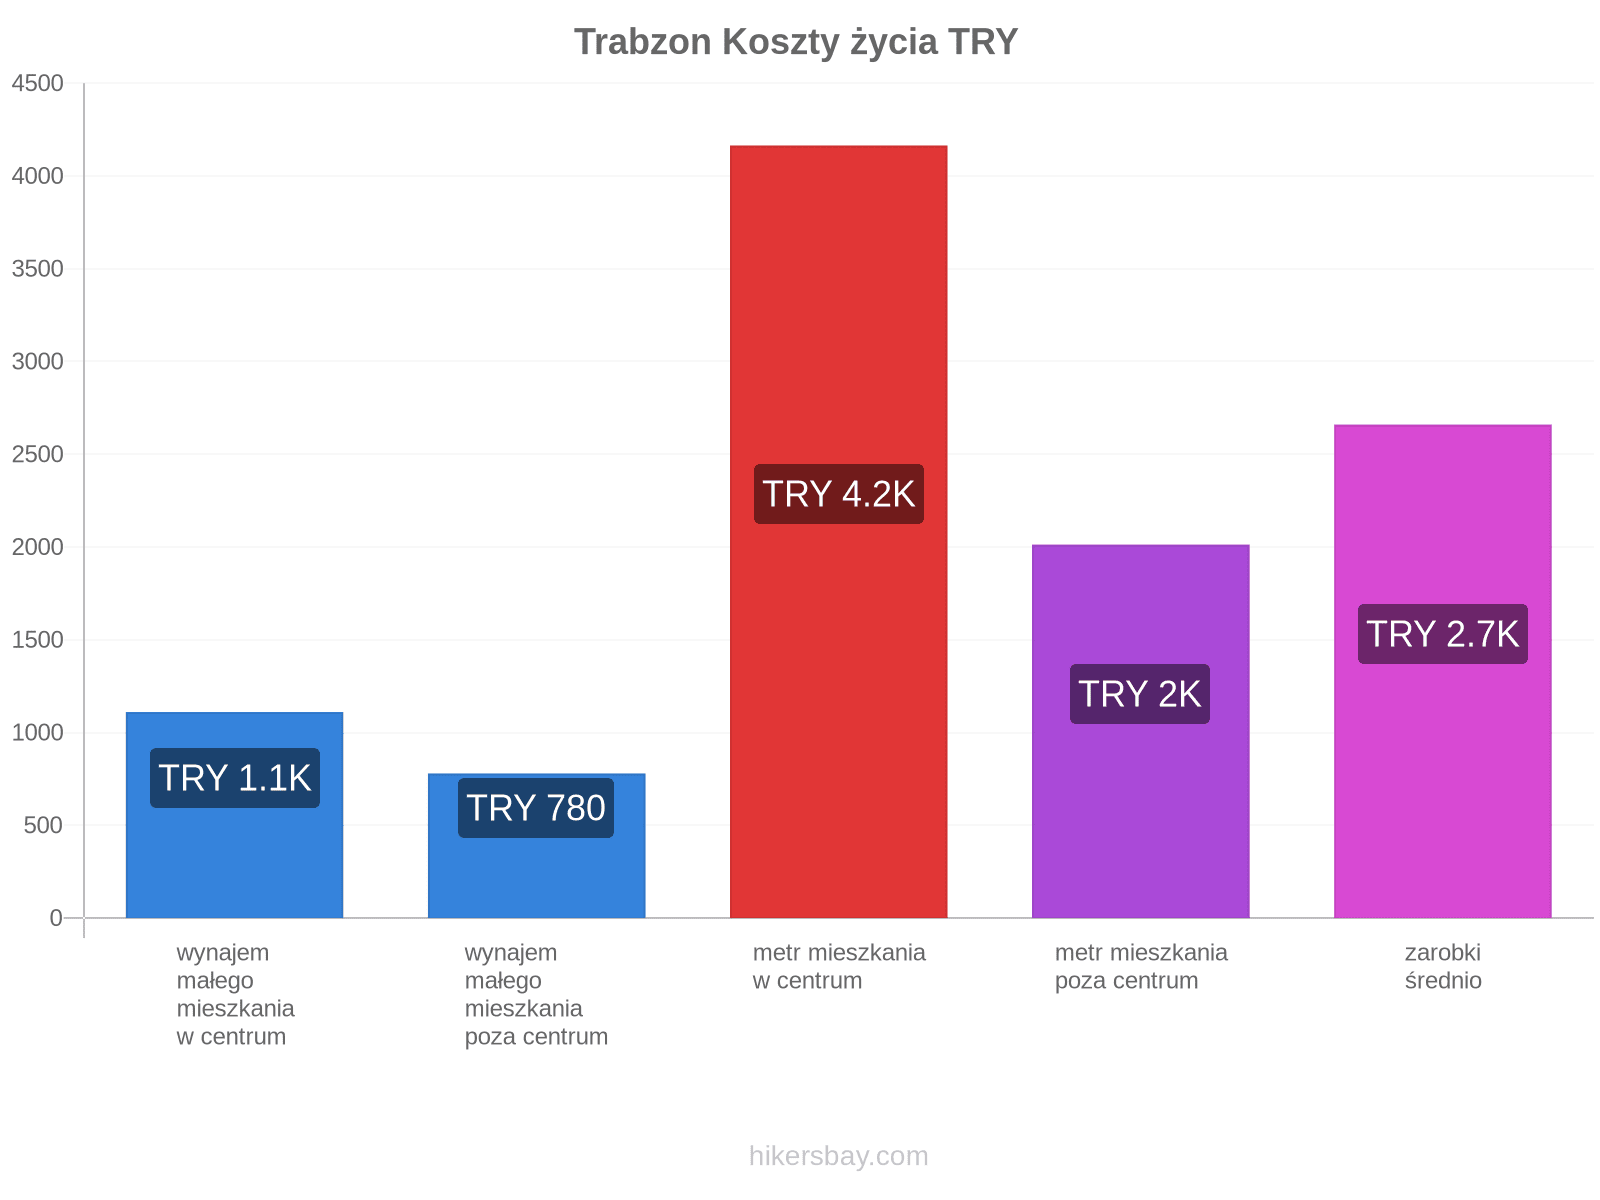 Trabzon koszty życia hikersbay.com